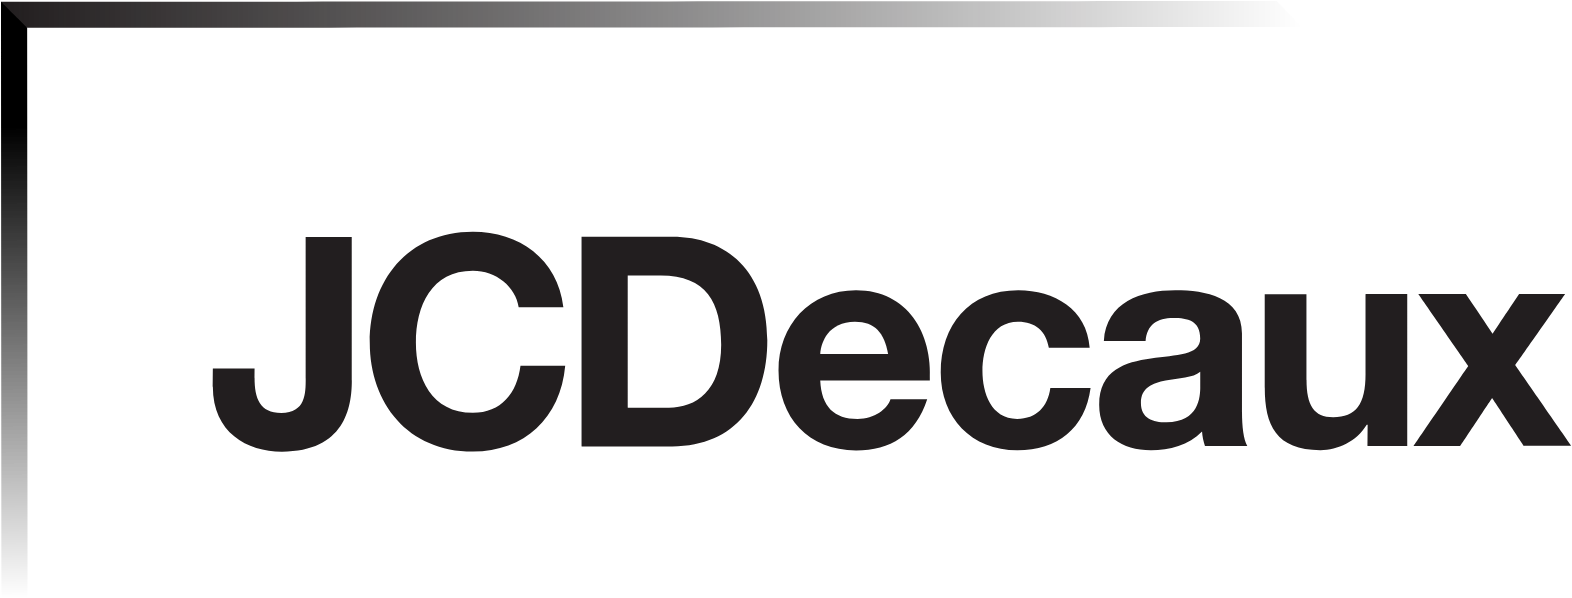 JCDecaux logo (PNG transparent)